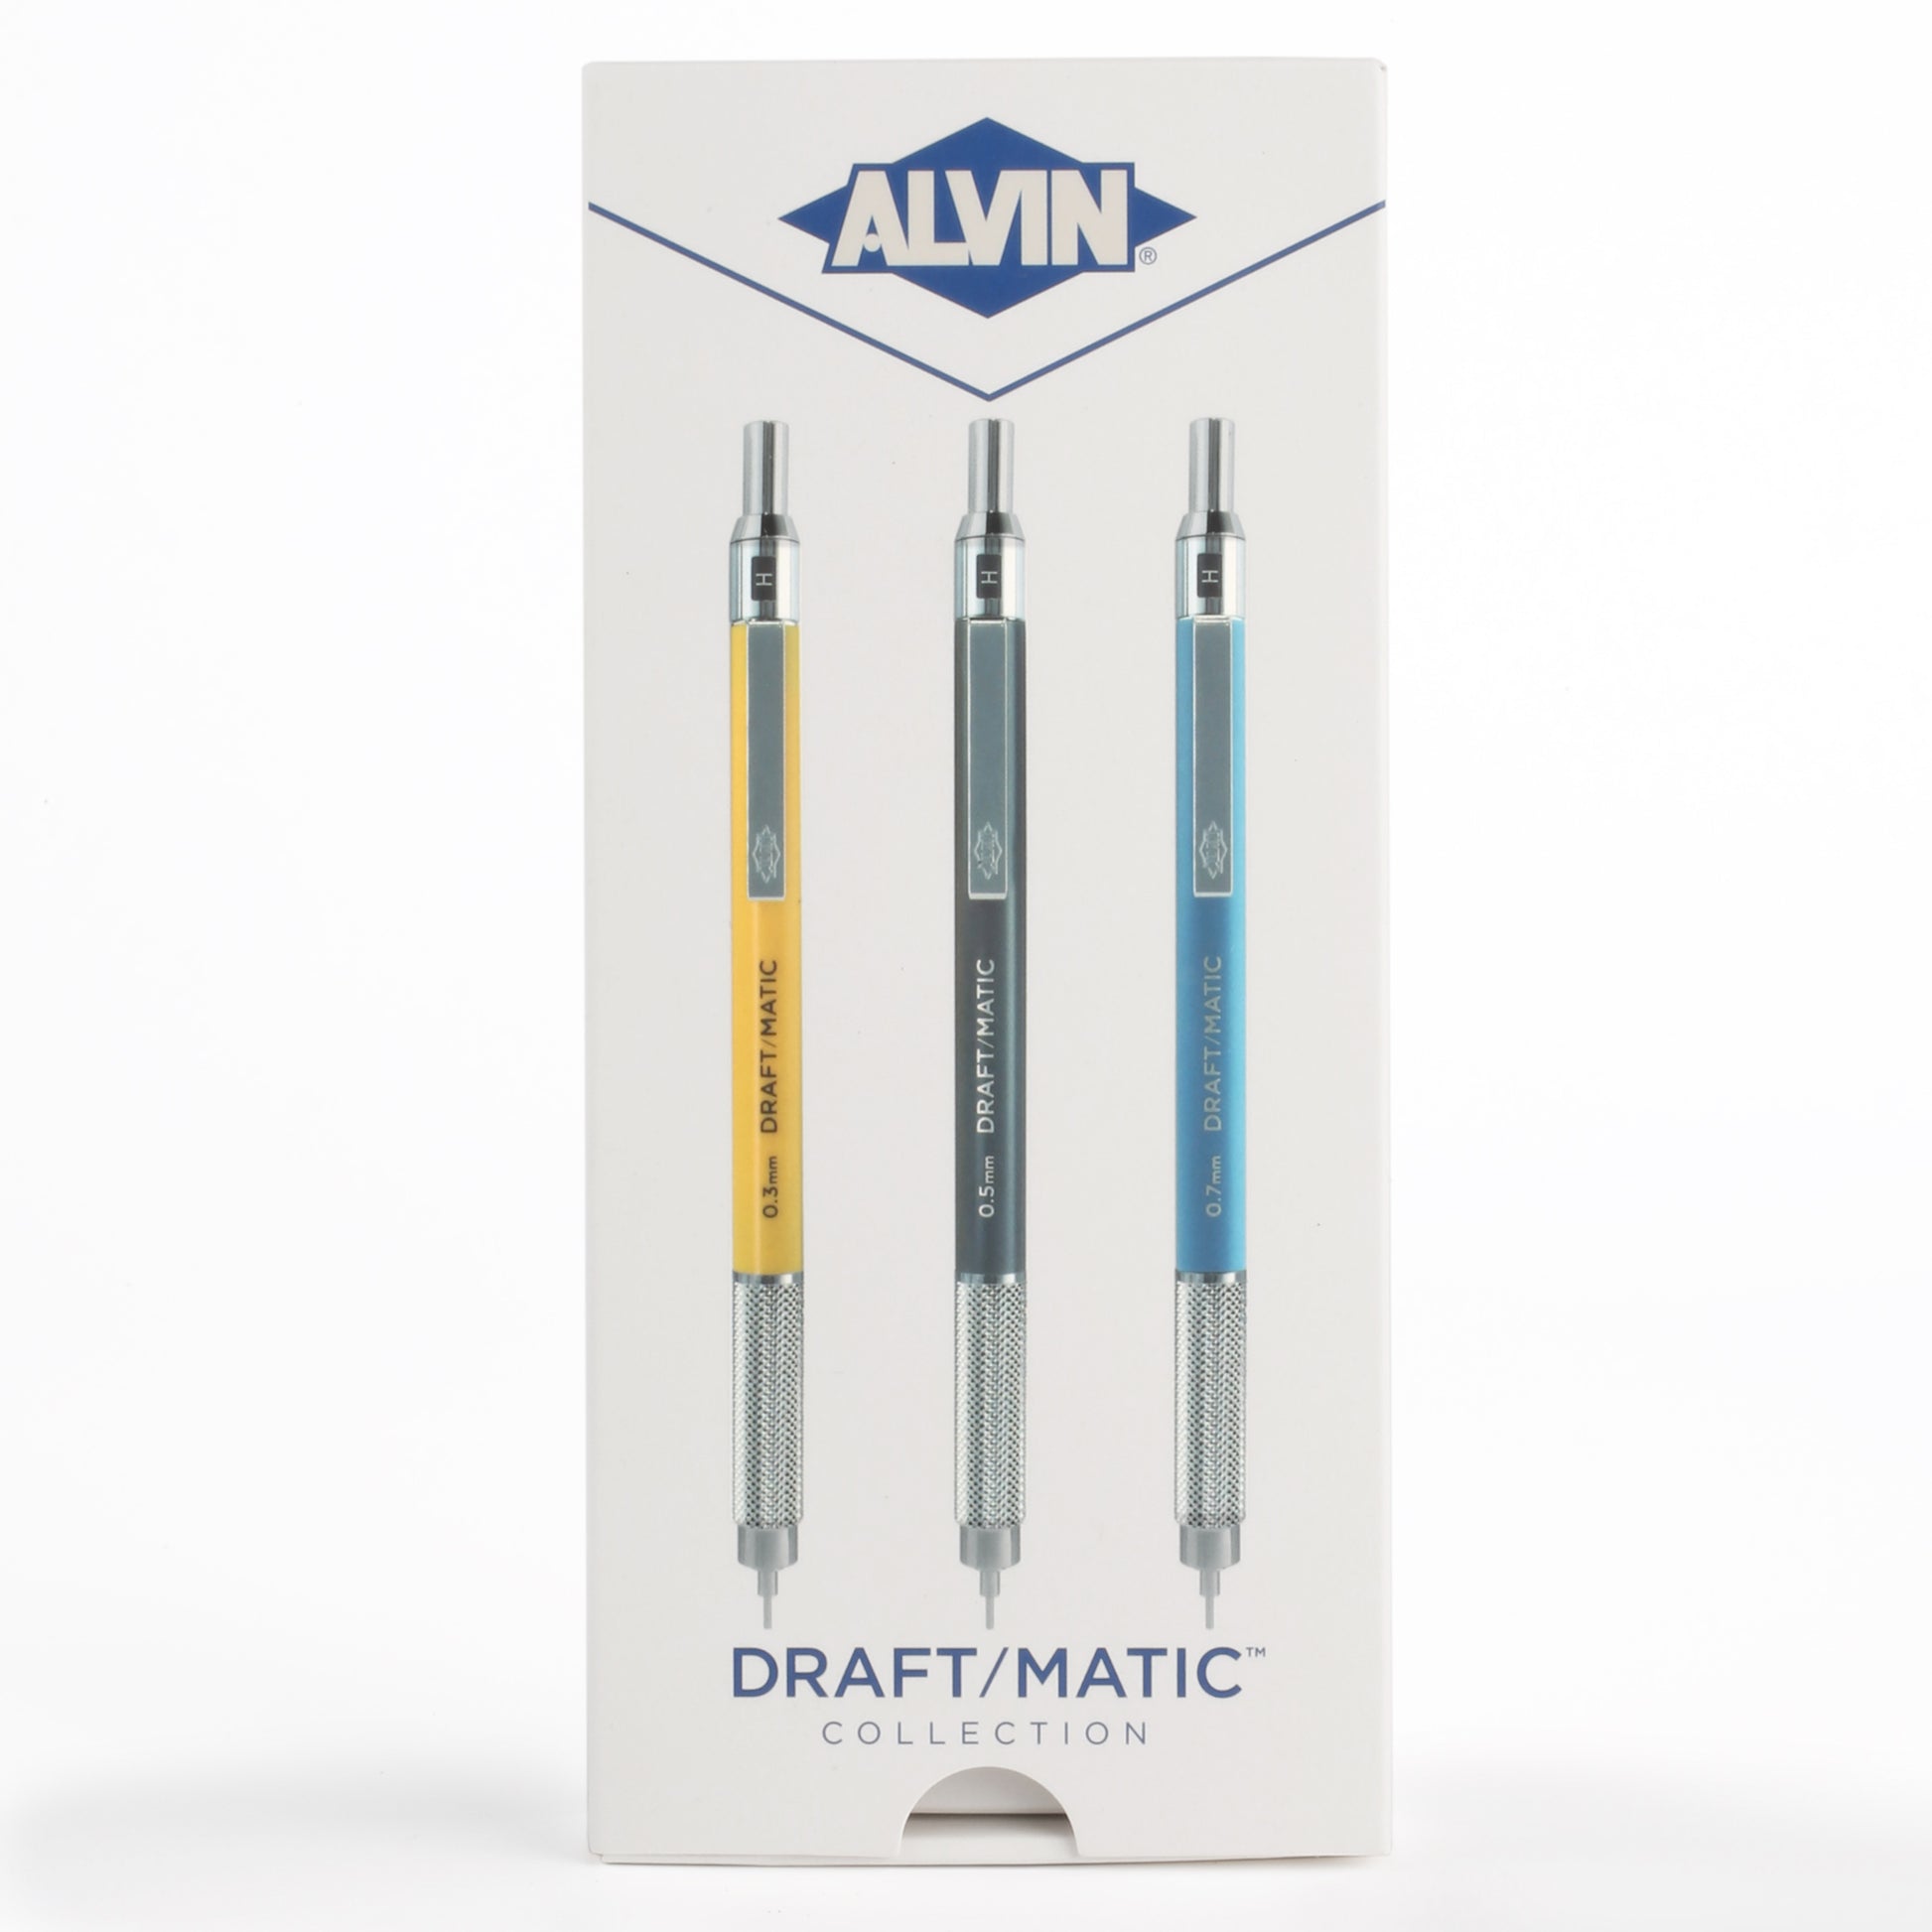 Alvin Draft/Matic Mechanical Pencils: The Steel Grip Drafting Pencil